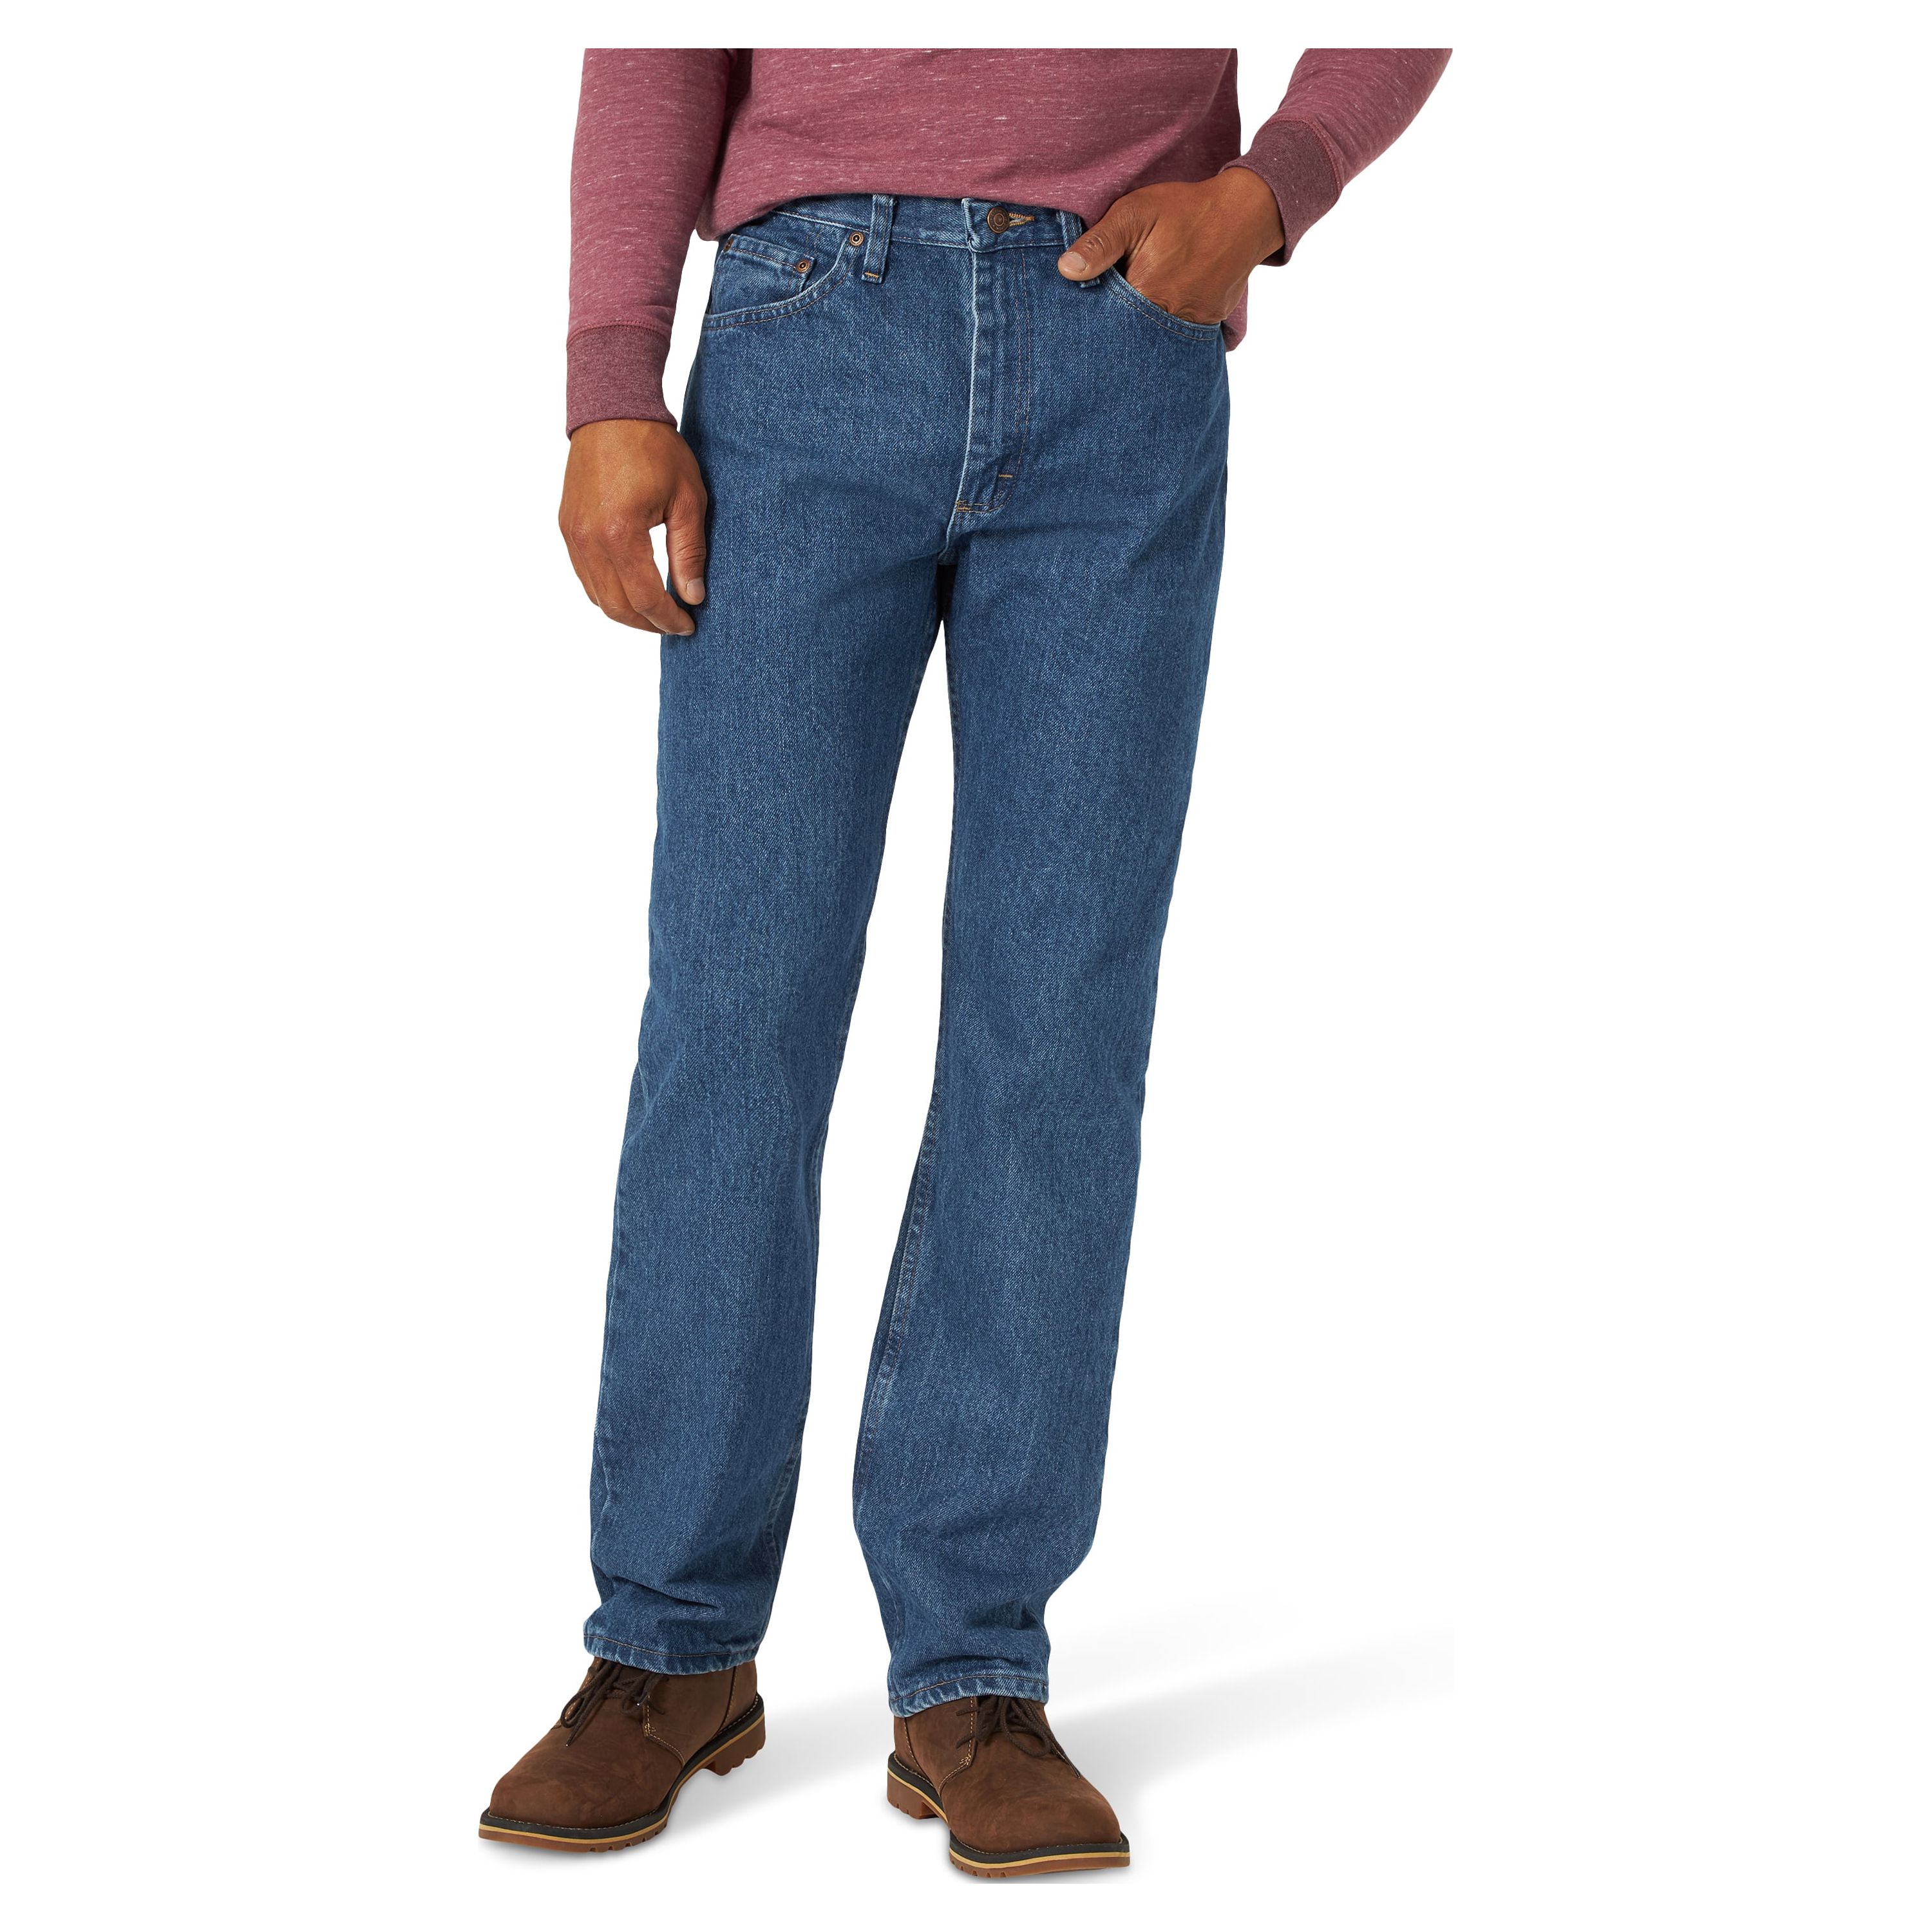 Wrangler Men's and Big Men's Regular Fit Jeans - image 1 of 6